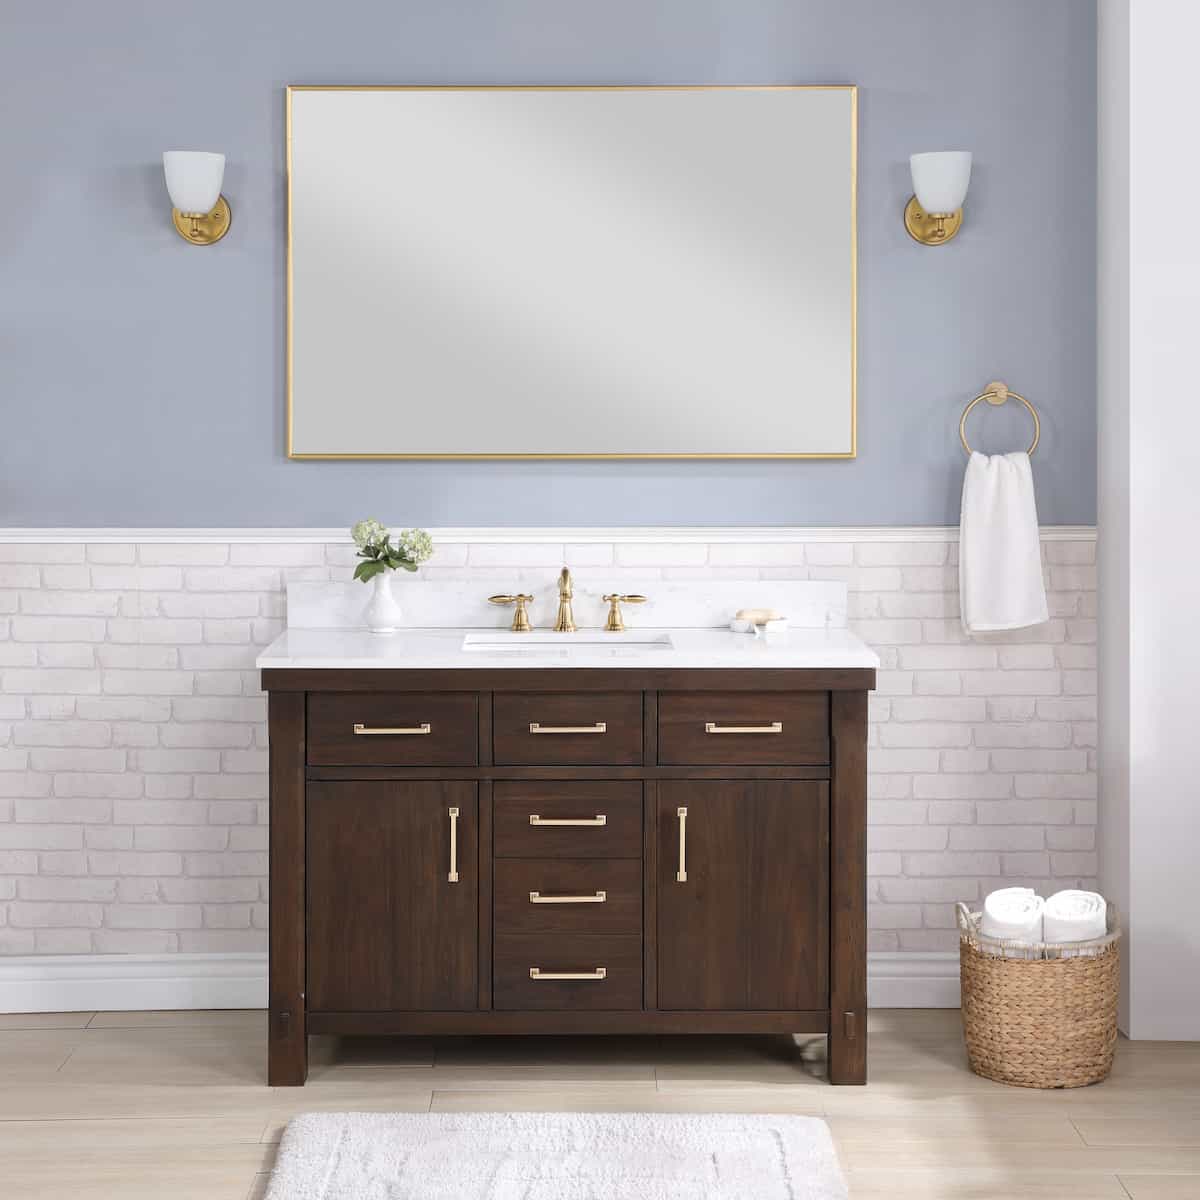 Vinnova Viella 48 Inch Freestanding Single Sink Bath Vanity in Deep Walnut Finish with White Composite Countertop With Mirror in Bathroom 701848-DW-WS